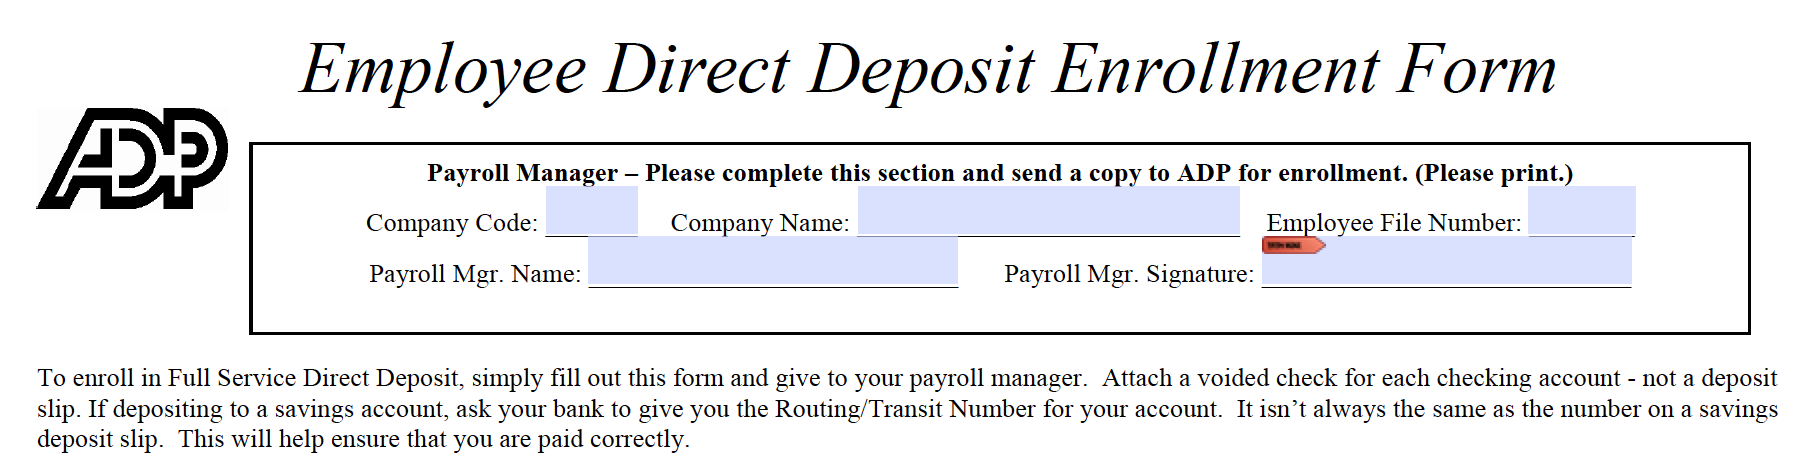 Free Adp Direct Deposit Authorization Form Pdf Eforms 8352